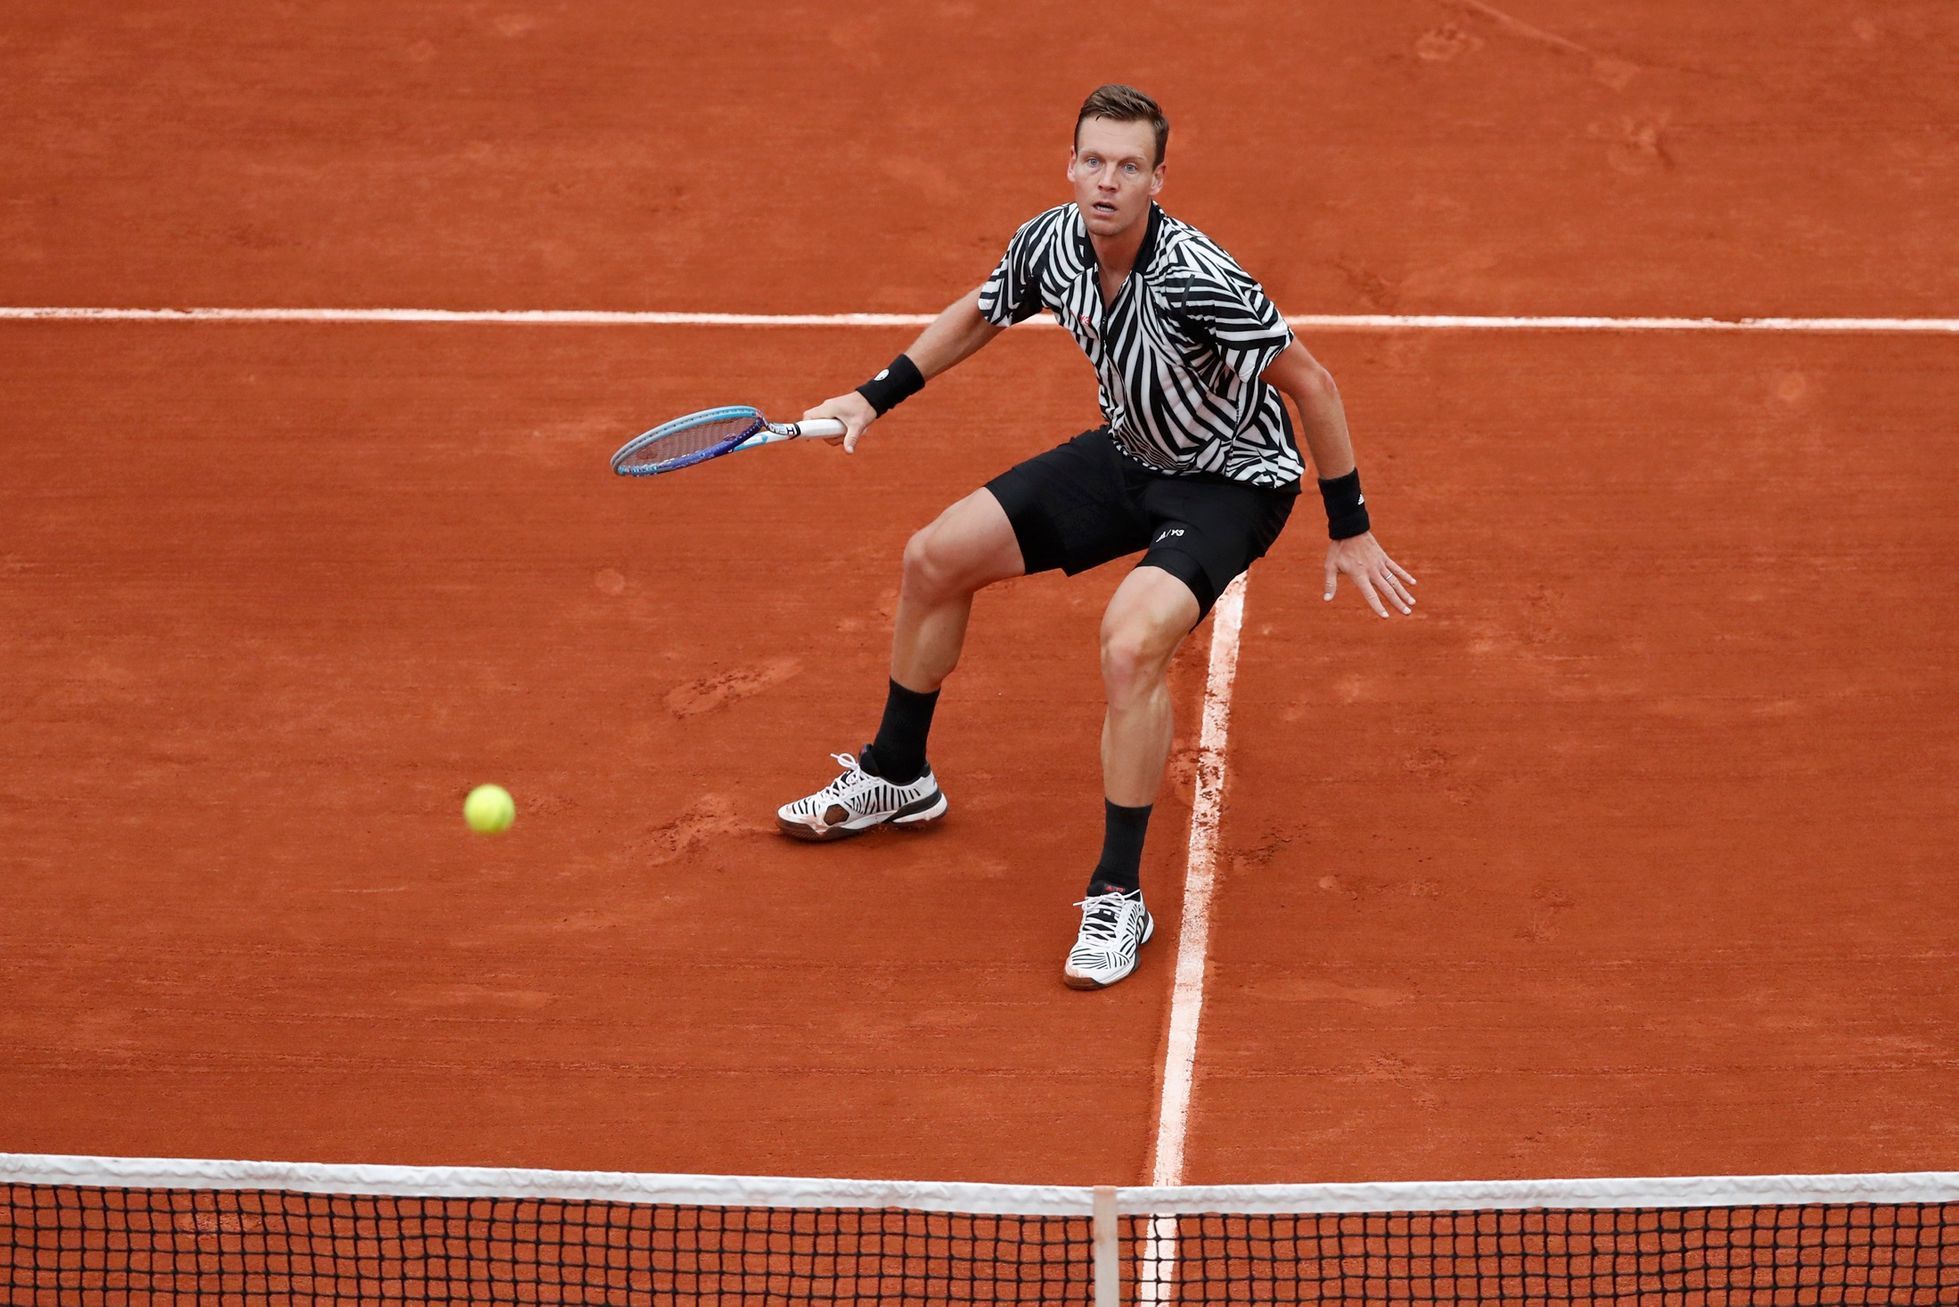 Tennis - French Open Mens Singles Quarterfinal match - Roland Garros - Novak Djokovic of Serbia vs Tomas Berdych of the Czech Republic